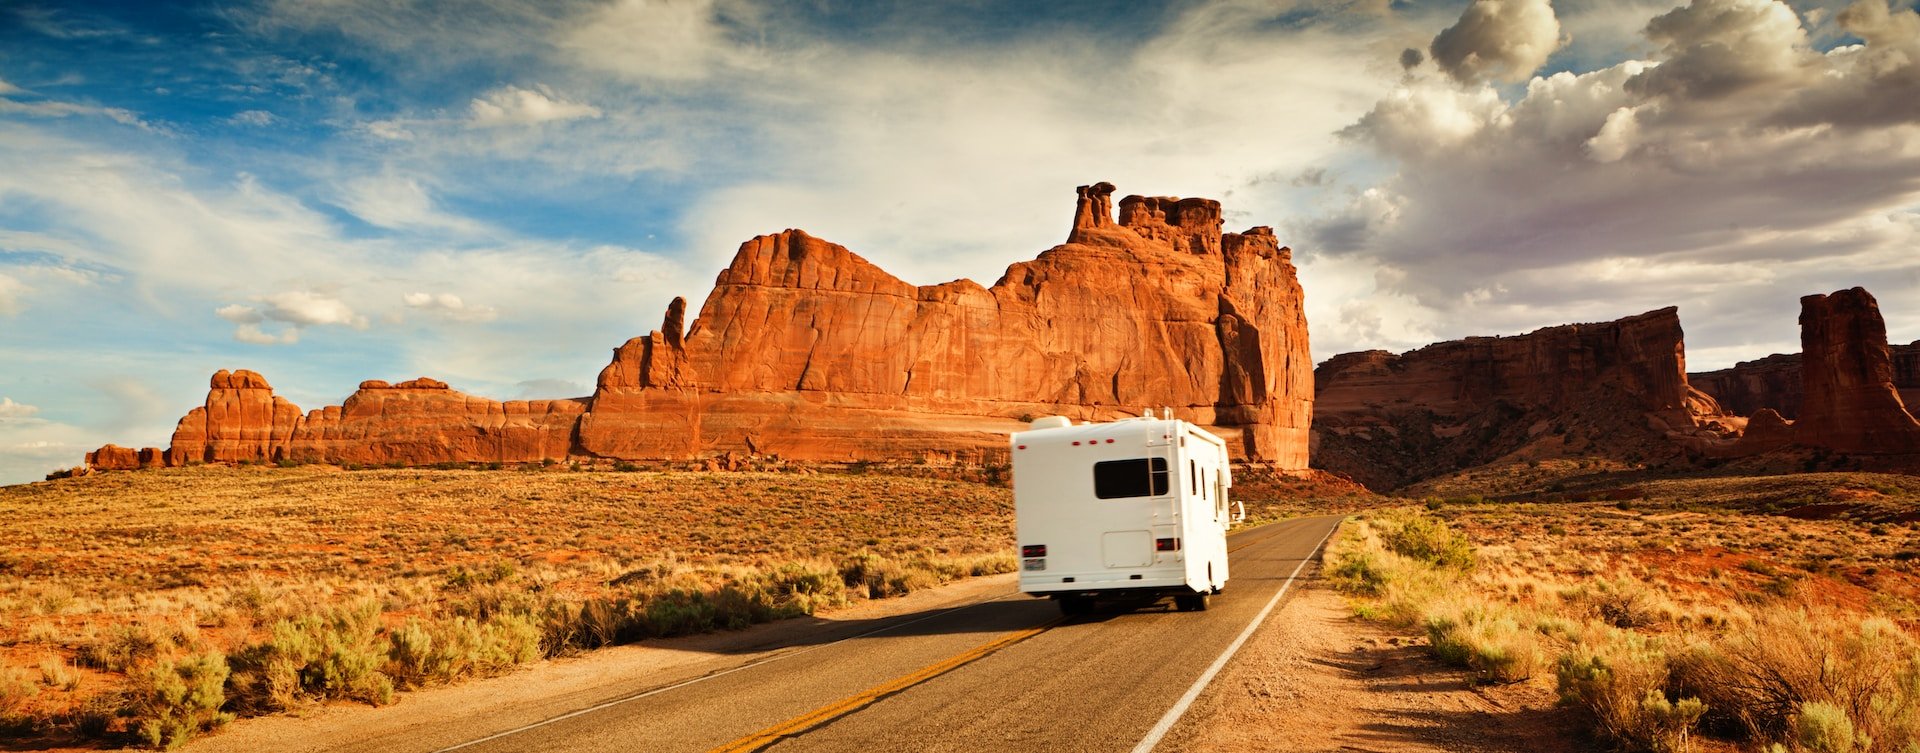 Camper over weg in Arizona, Verenigde Staten